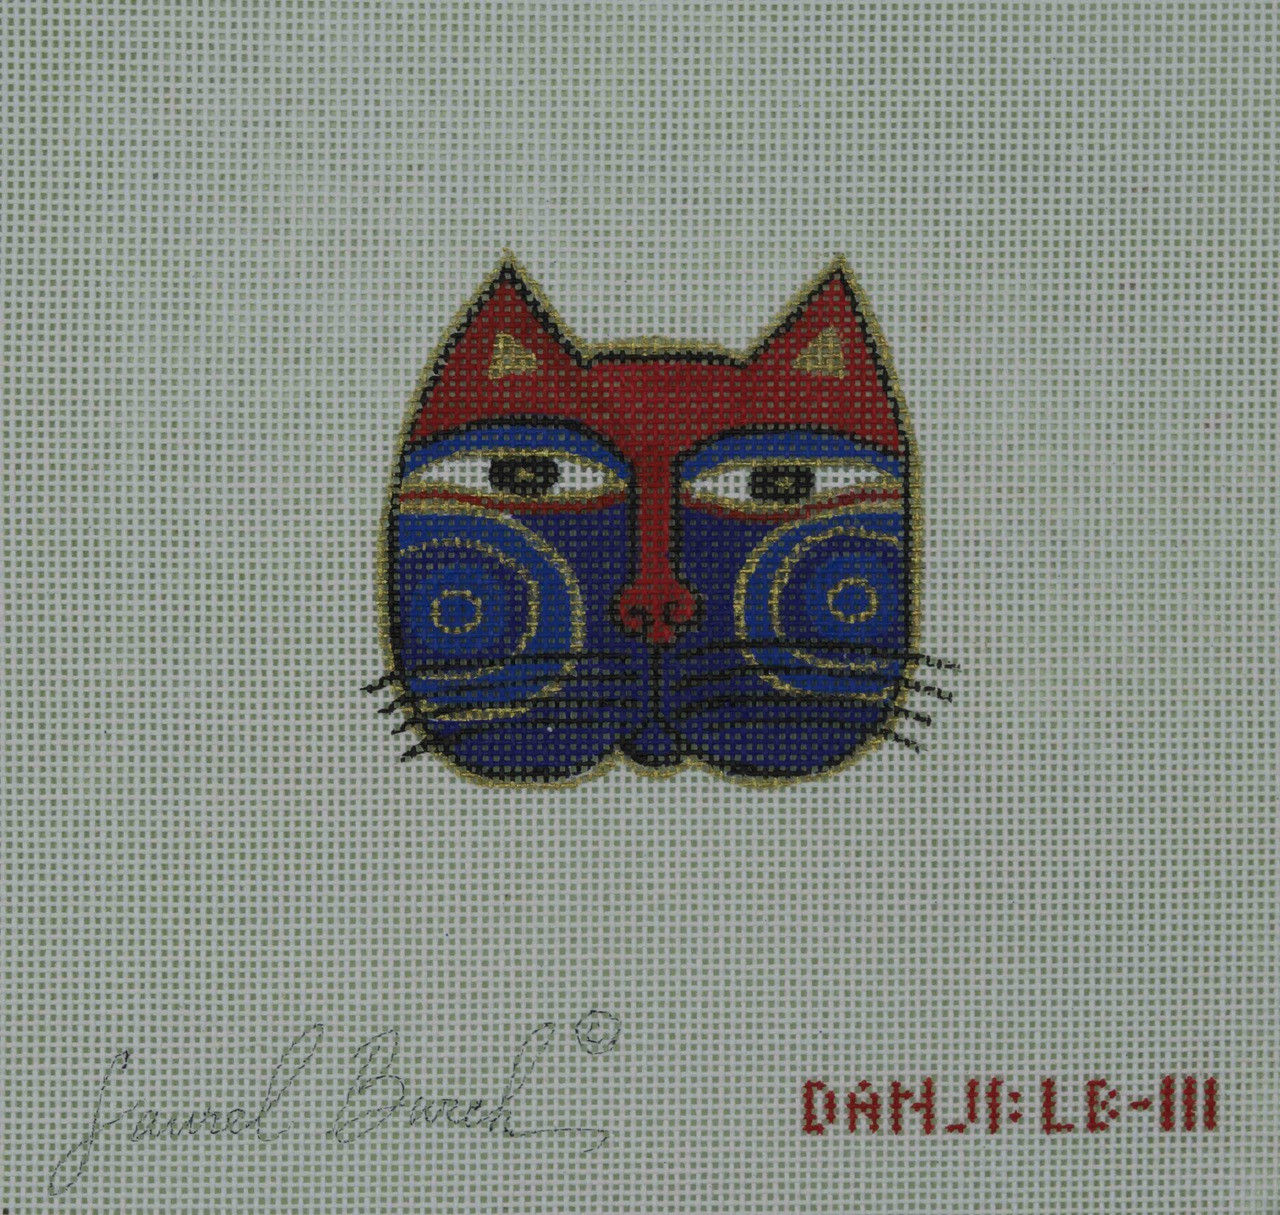 Hand-Painted Needlepoint Canvas - Danji Designs - LB-111 - Cat Face - The  Yarn Barn of San Antonio